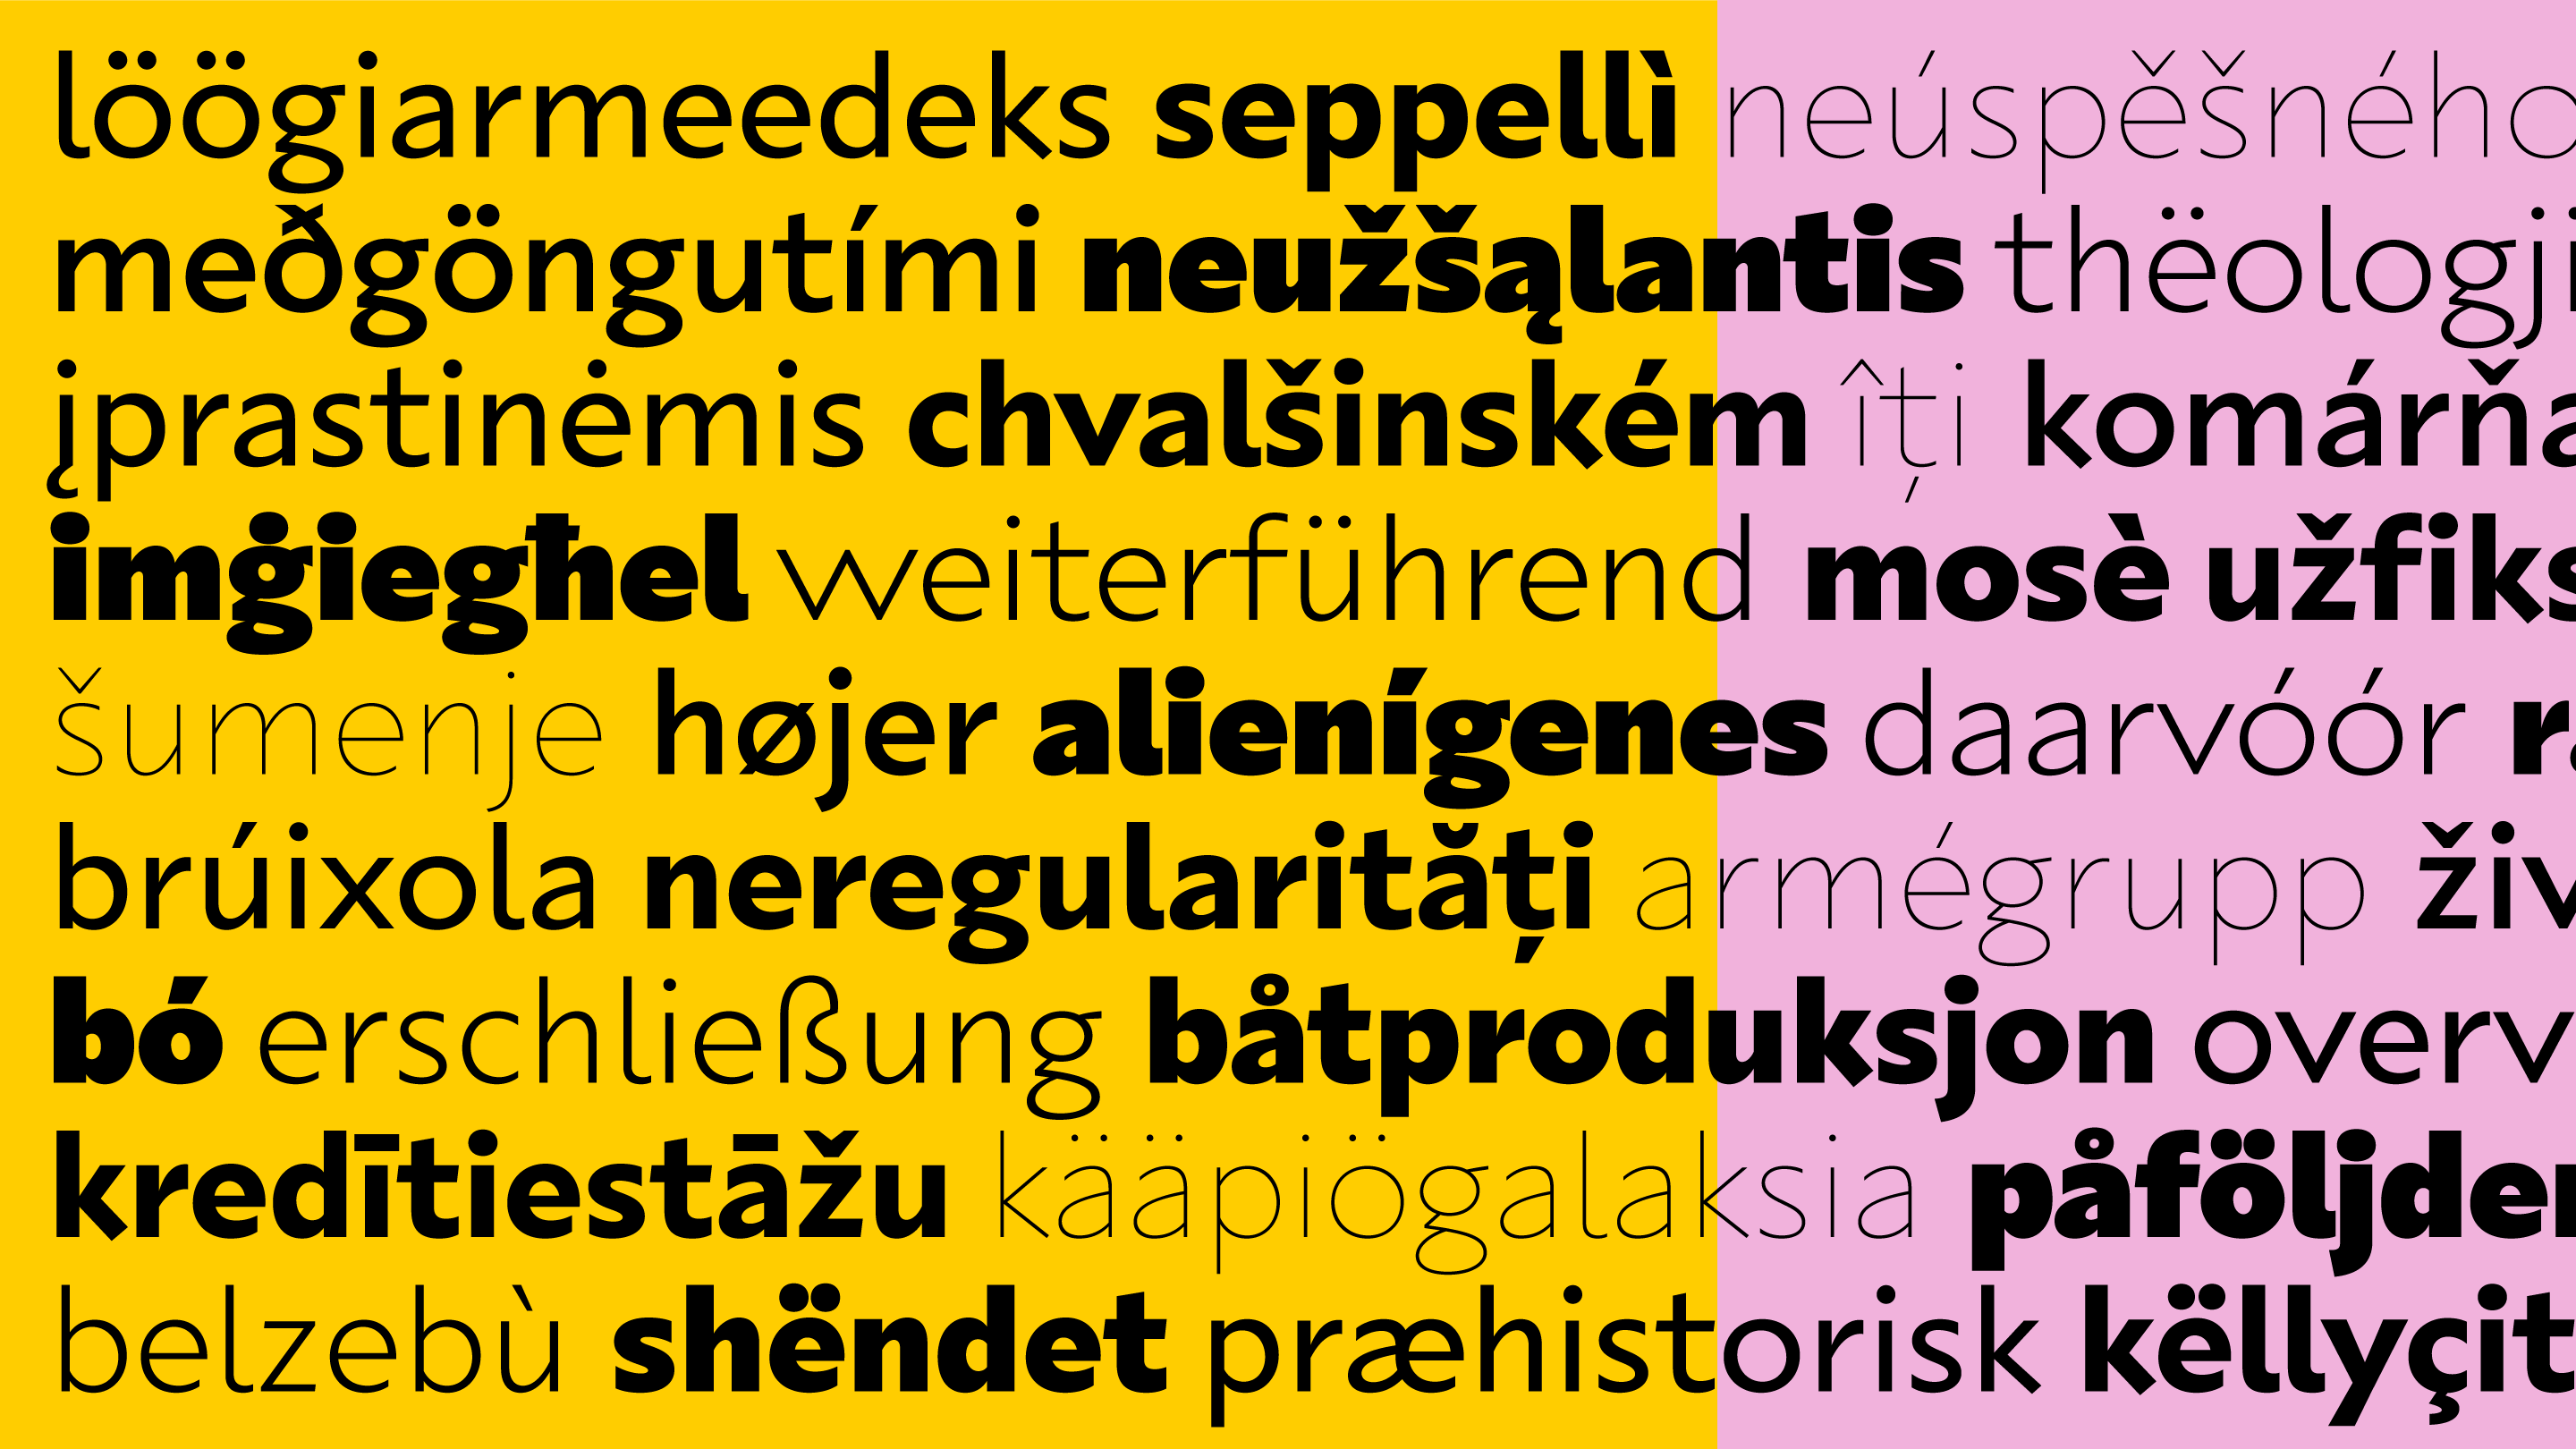 Custom Fonts: Comenius University